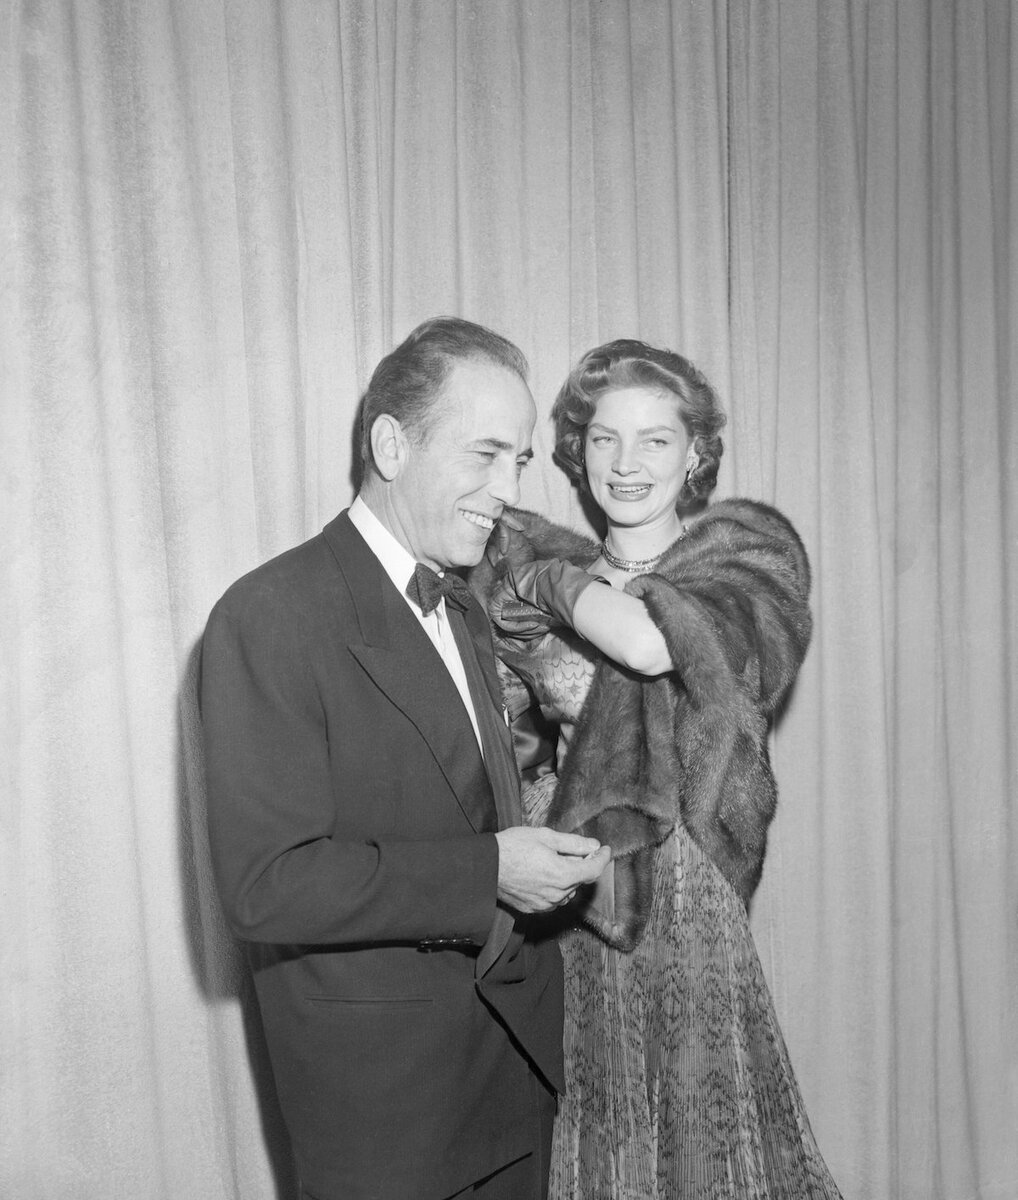    Хамфри Богарт и Лорен Бэколл , 1952Bettmann/Getty Images